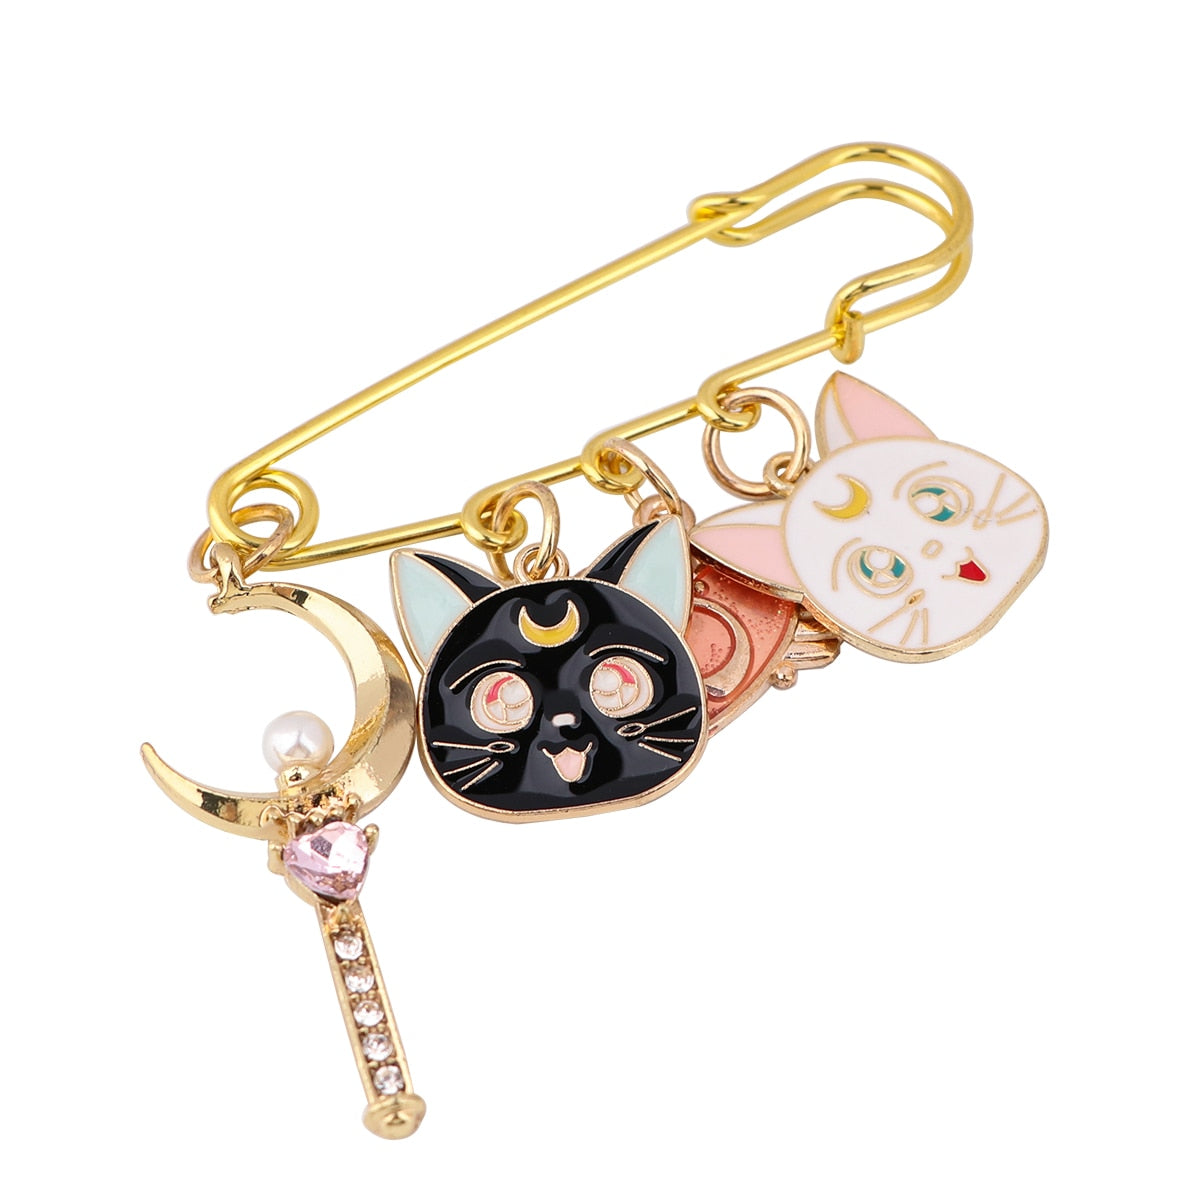 Pin Broche vintage Dijes Sailor moon Luna